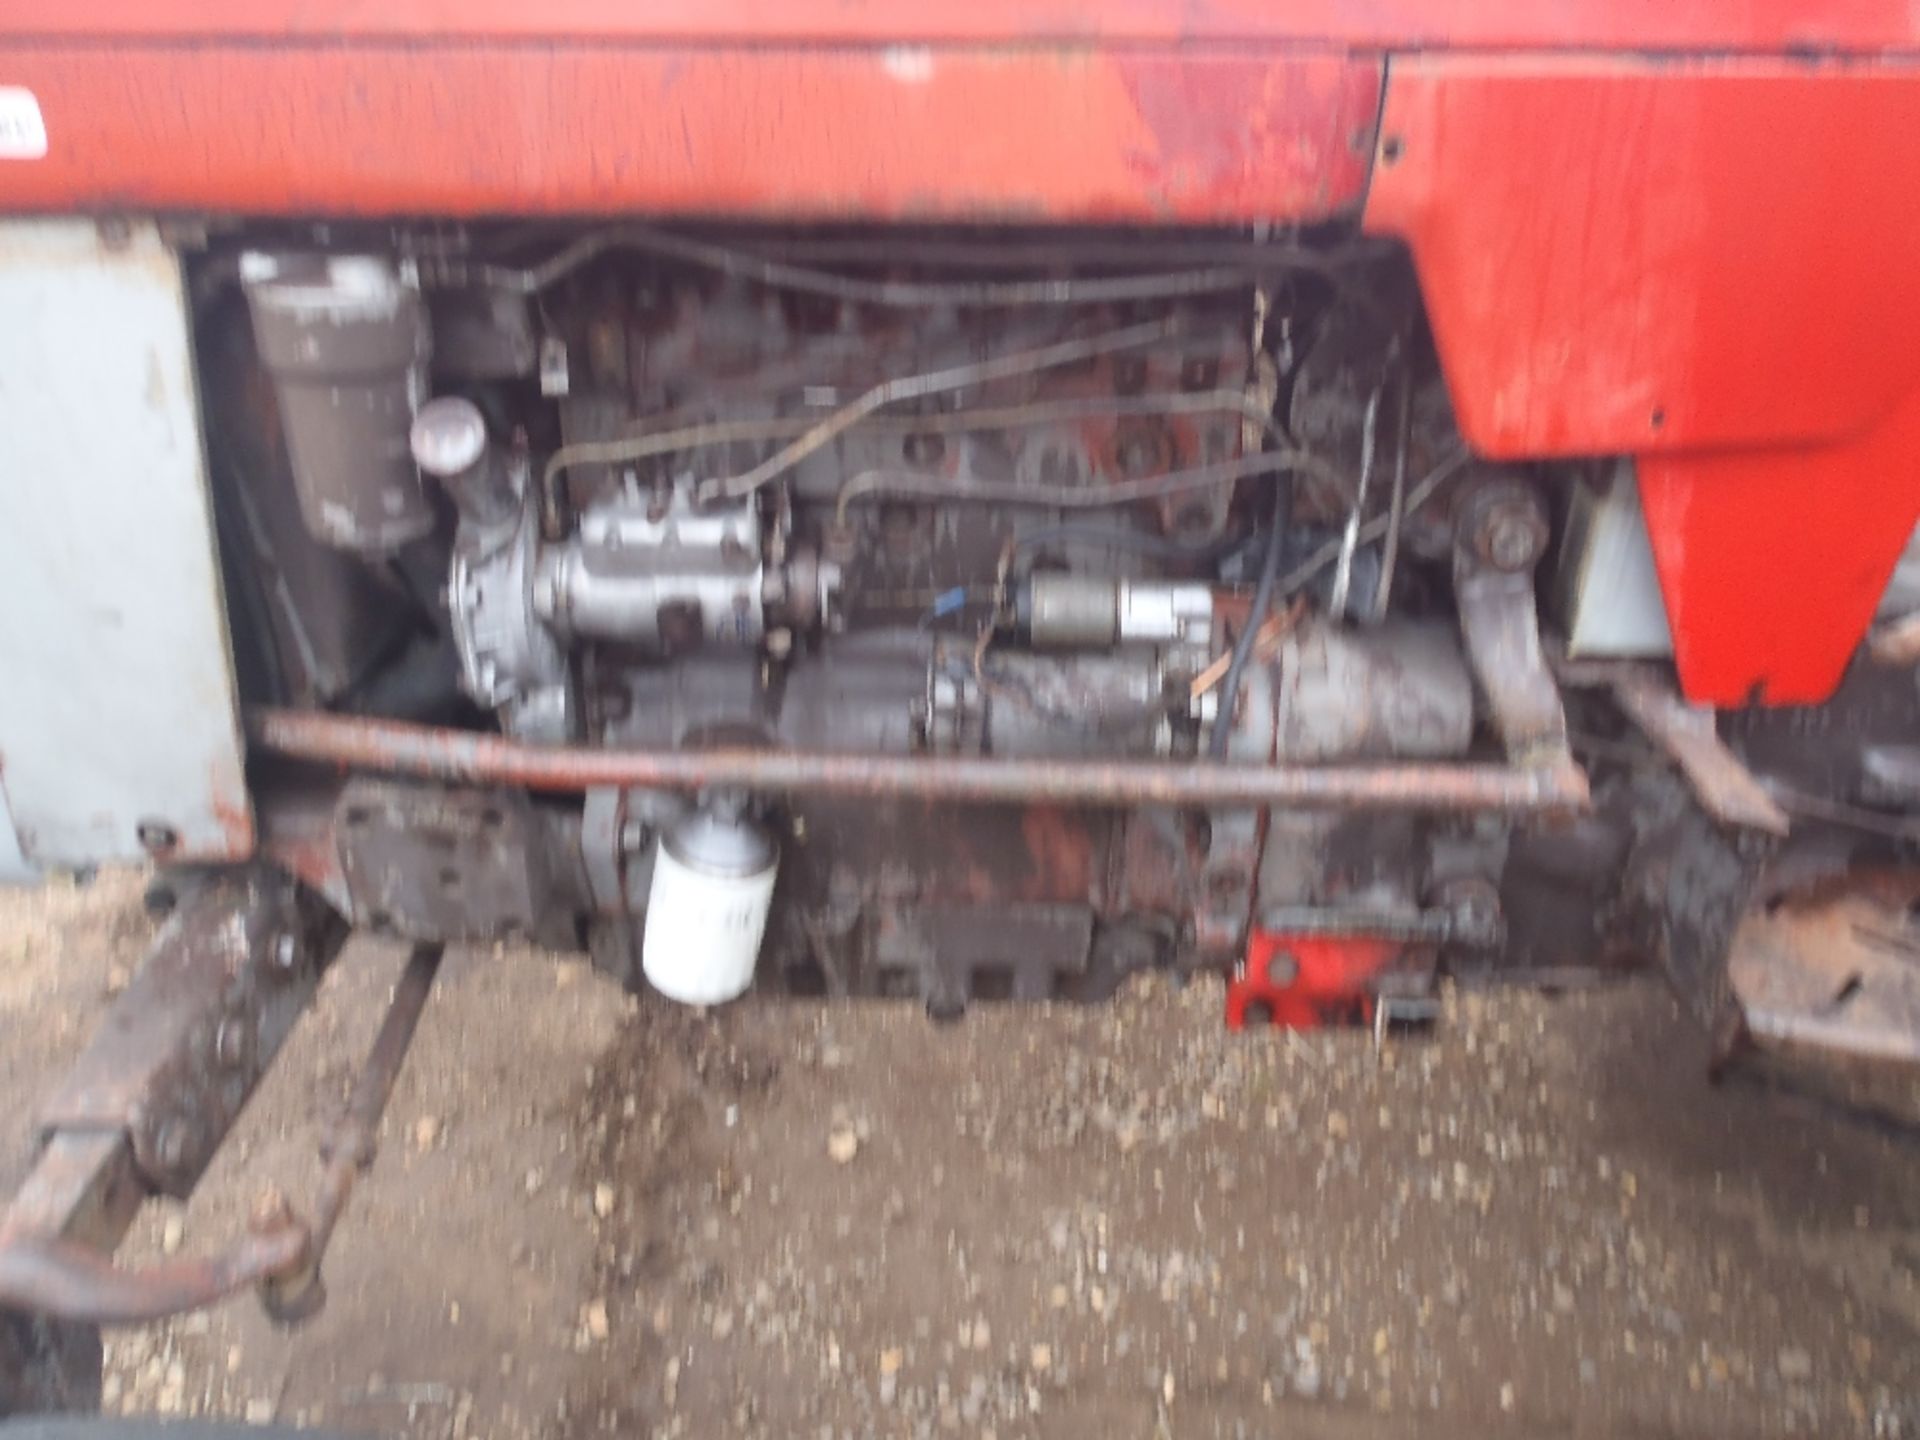 Massey Ferguson 185 2wd Tractor Ser.No.320154 Reg No 76 DL 38 - Image 7 of 8